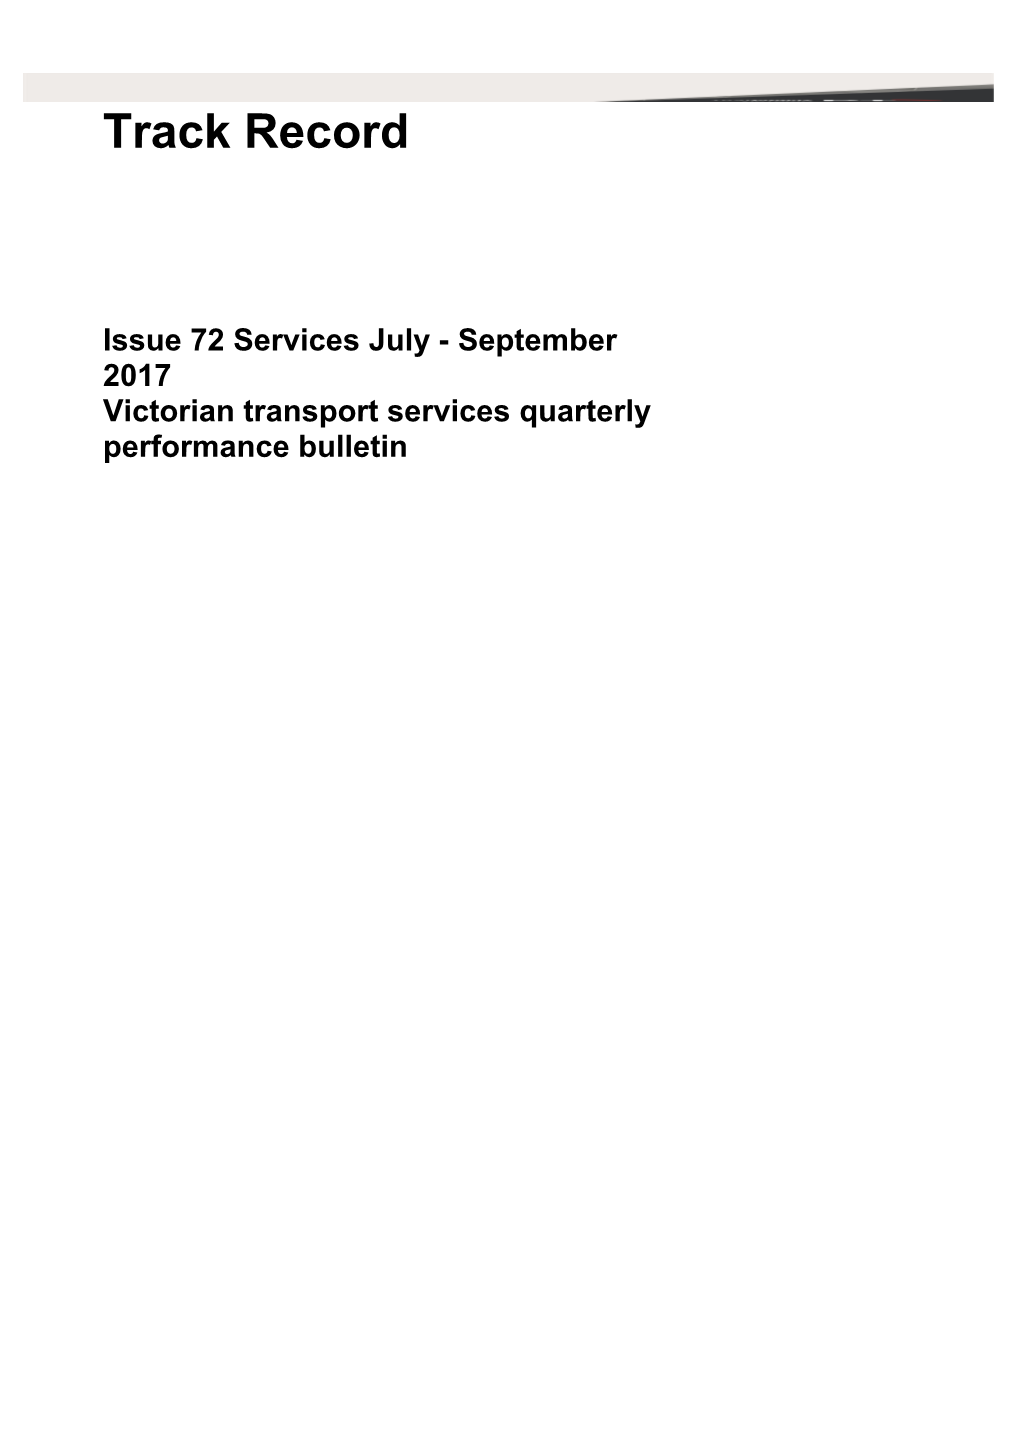 Victorian Transport Services Quarterly Performance Bulletin